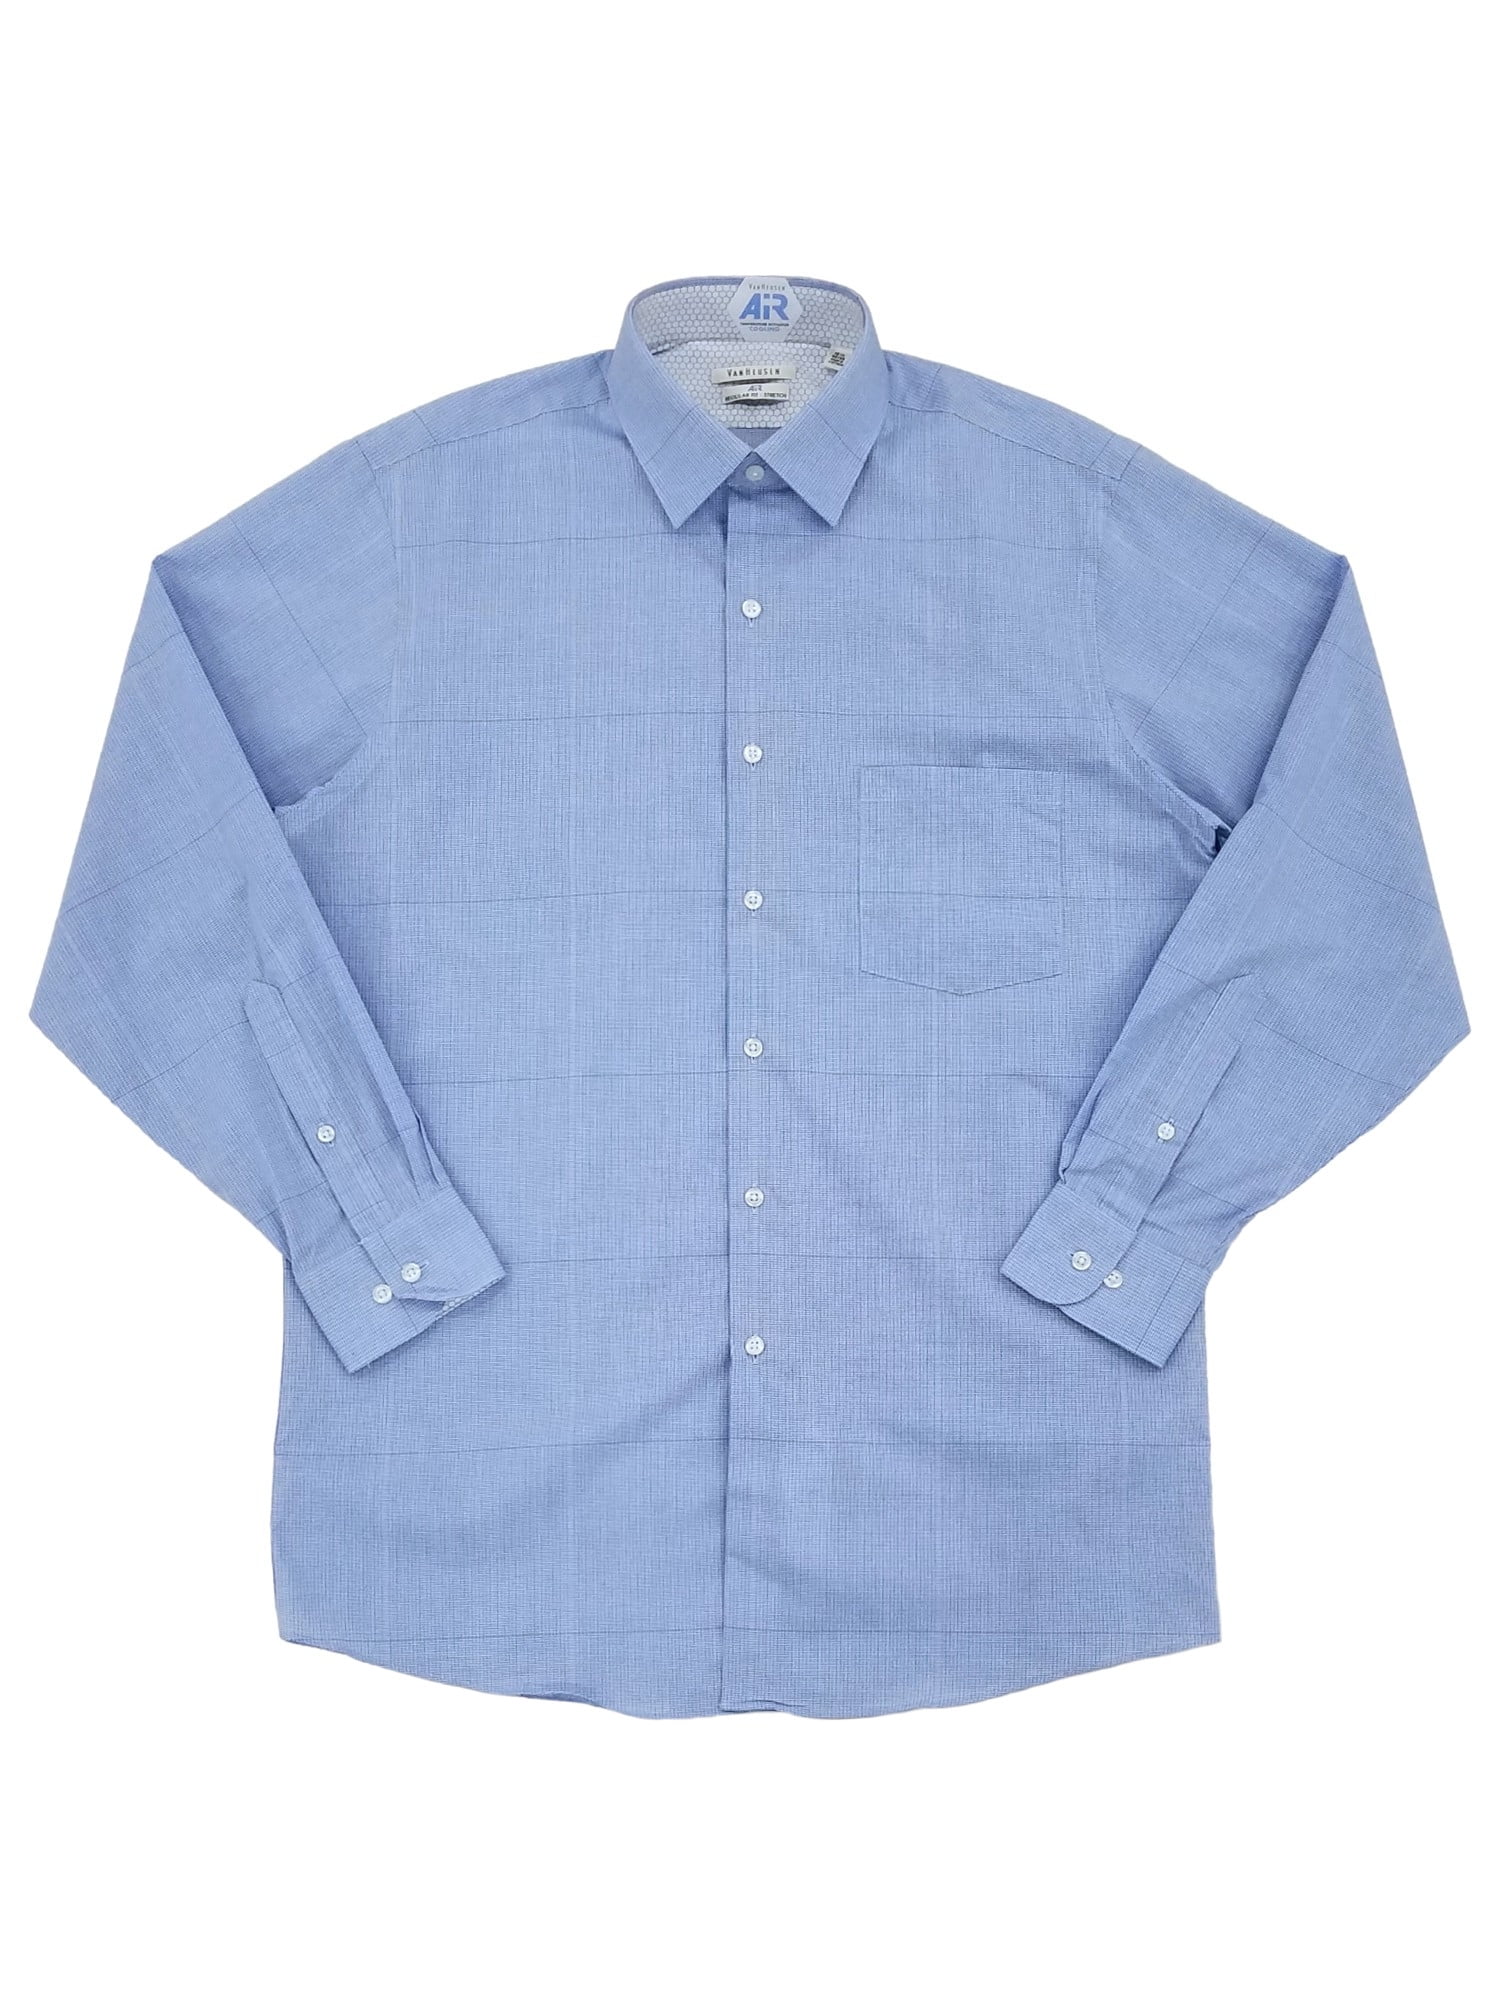 Van Heusen Mens Dress Shirt Slim Fit Flex Collar Stretch Solid 17.5 Neck  36-37 Sleeve Charcoal